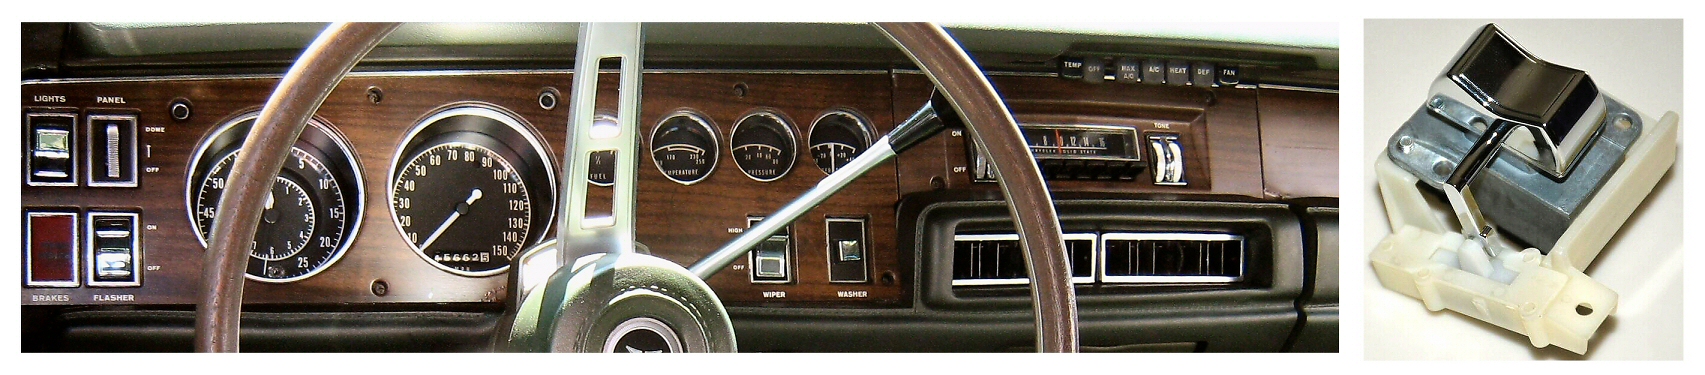 1968-1970 B-body Rallye Instrument Panel